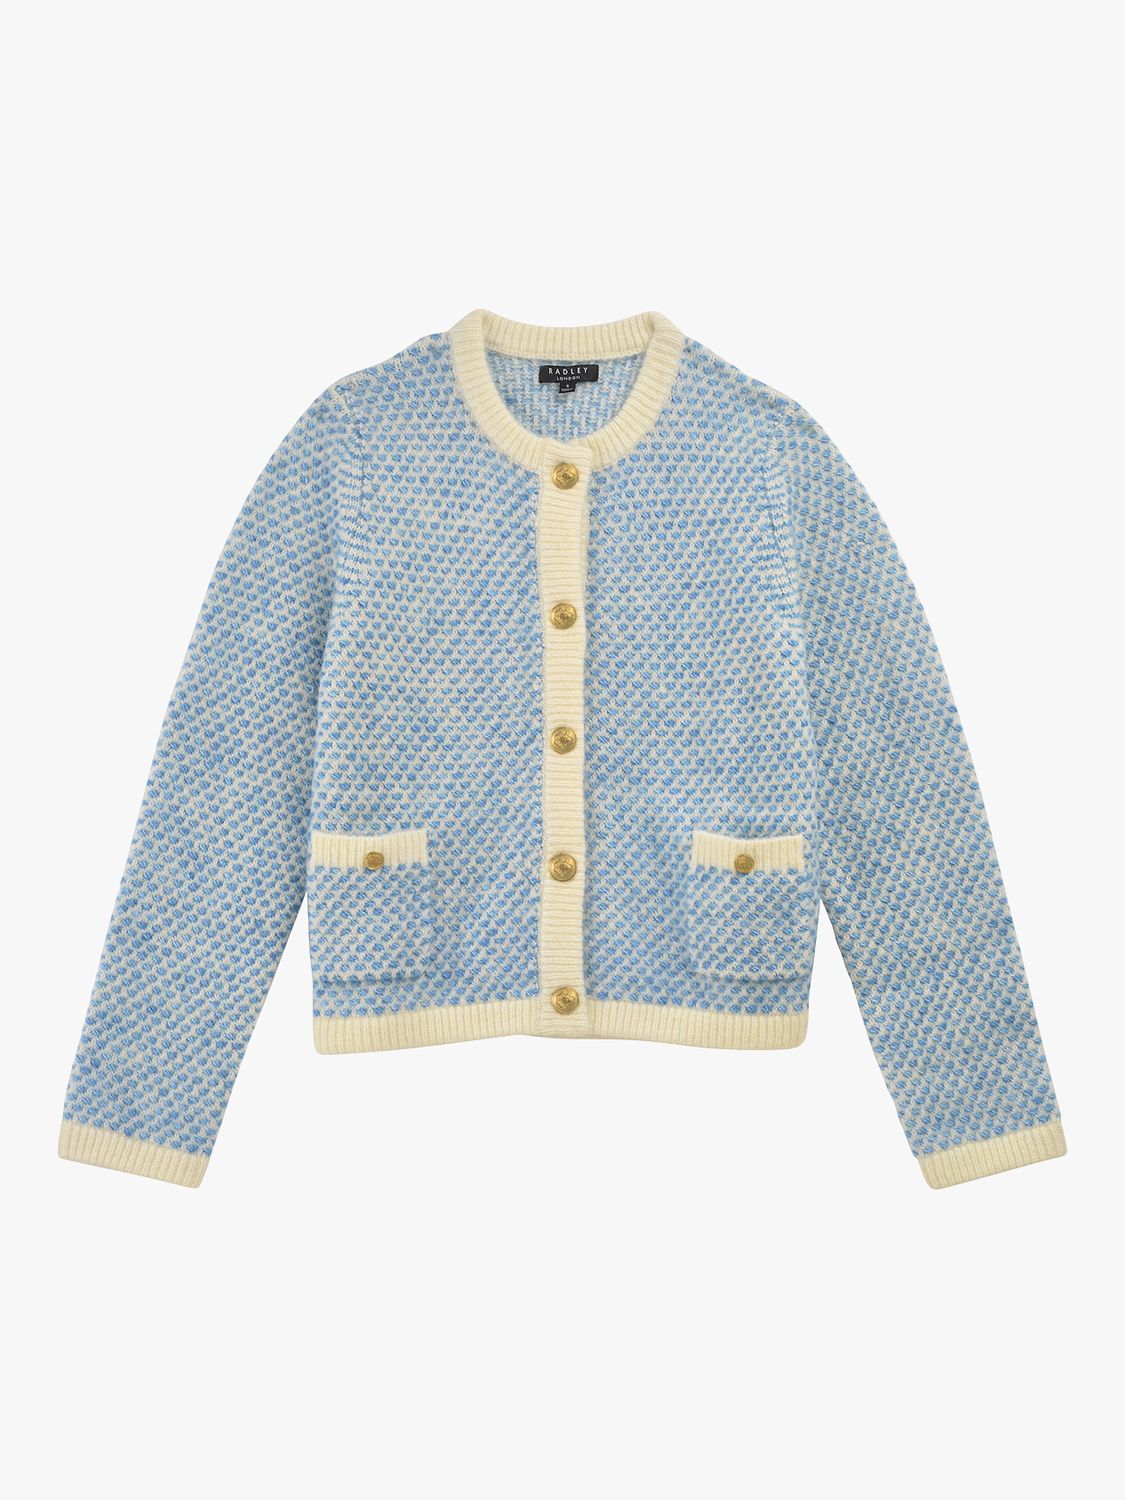 Radley Sloane Street Knitted Jacket, Blue at John Lewis & Partners